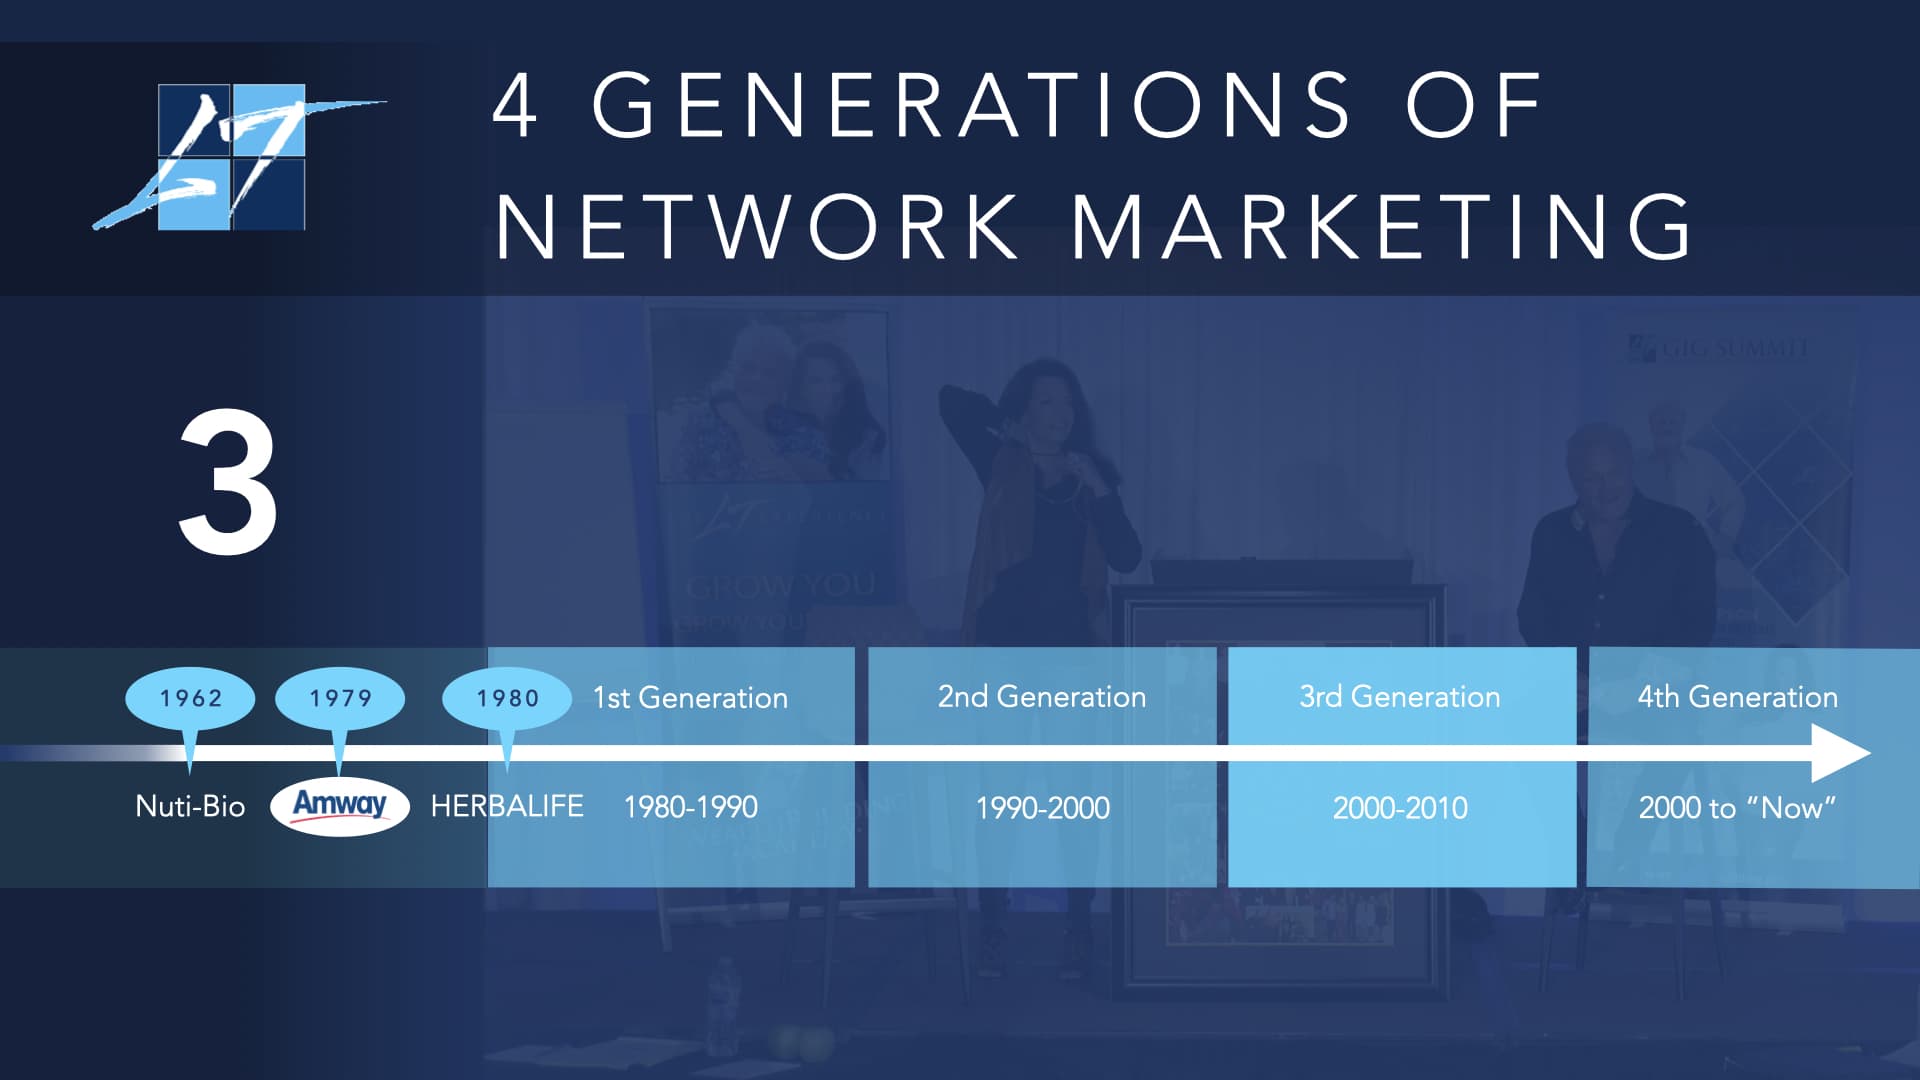 3rd Generation of Network Marketing